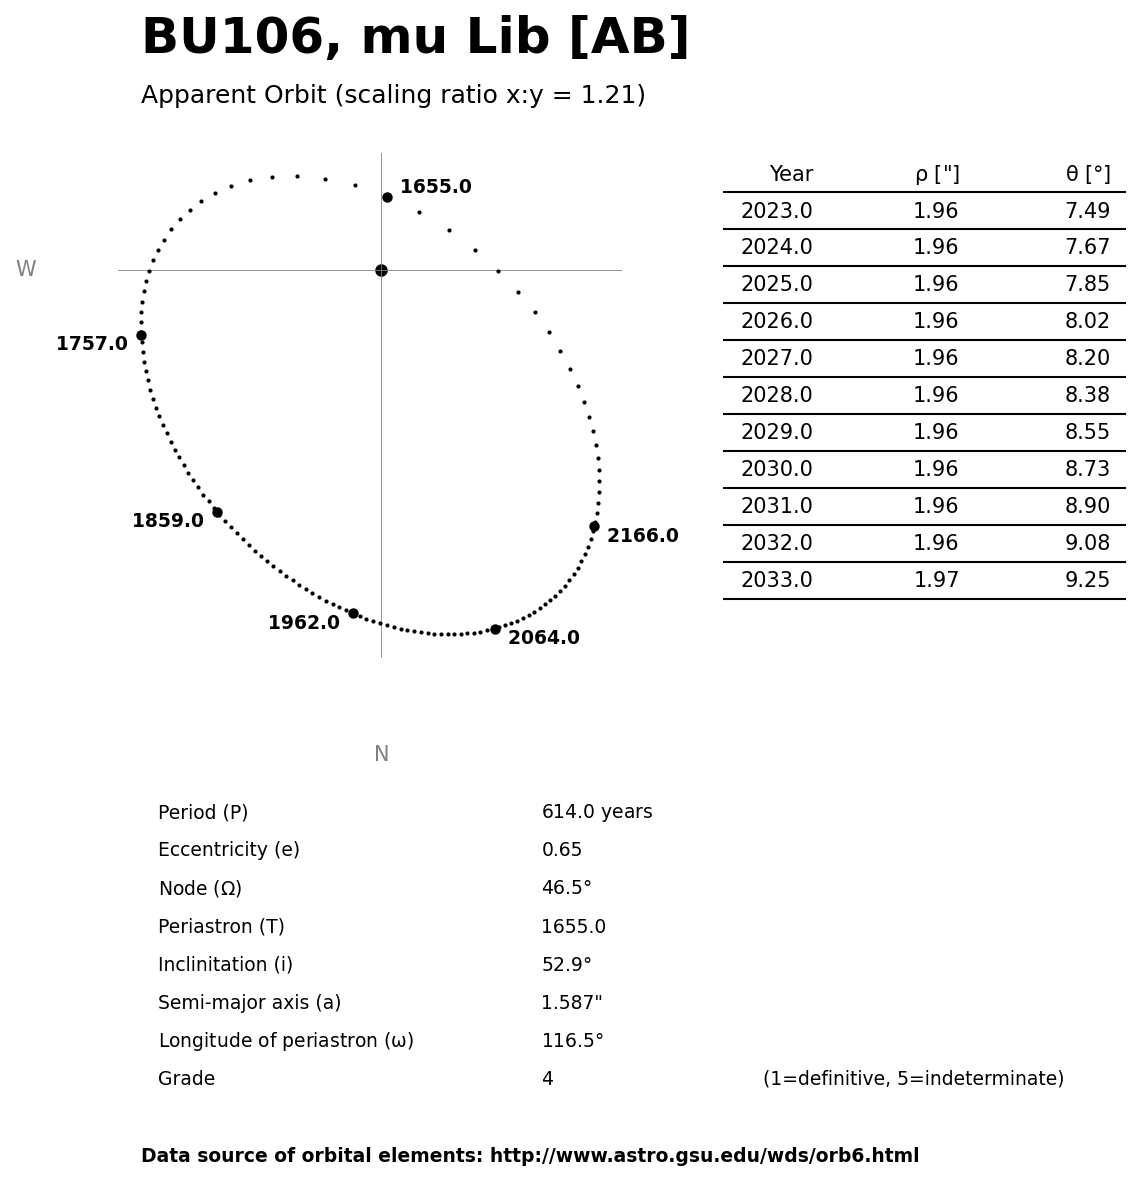 ../images/binary-star-orbits/BU106-AB-orbit.jpg